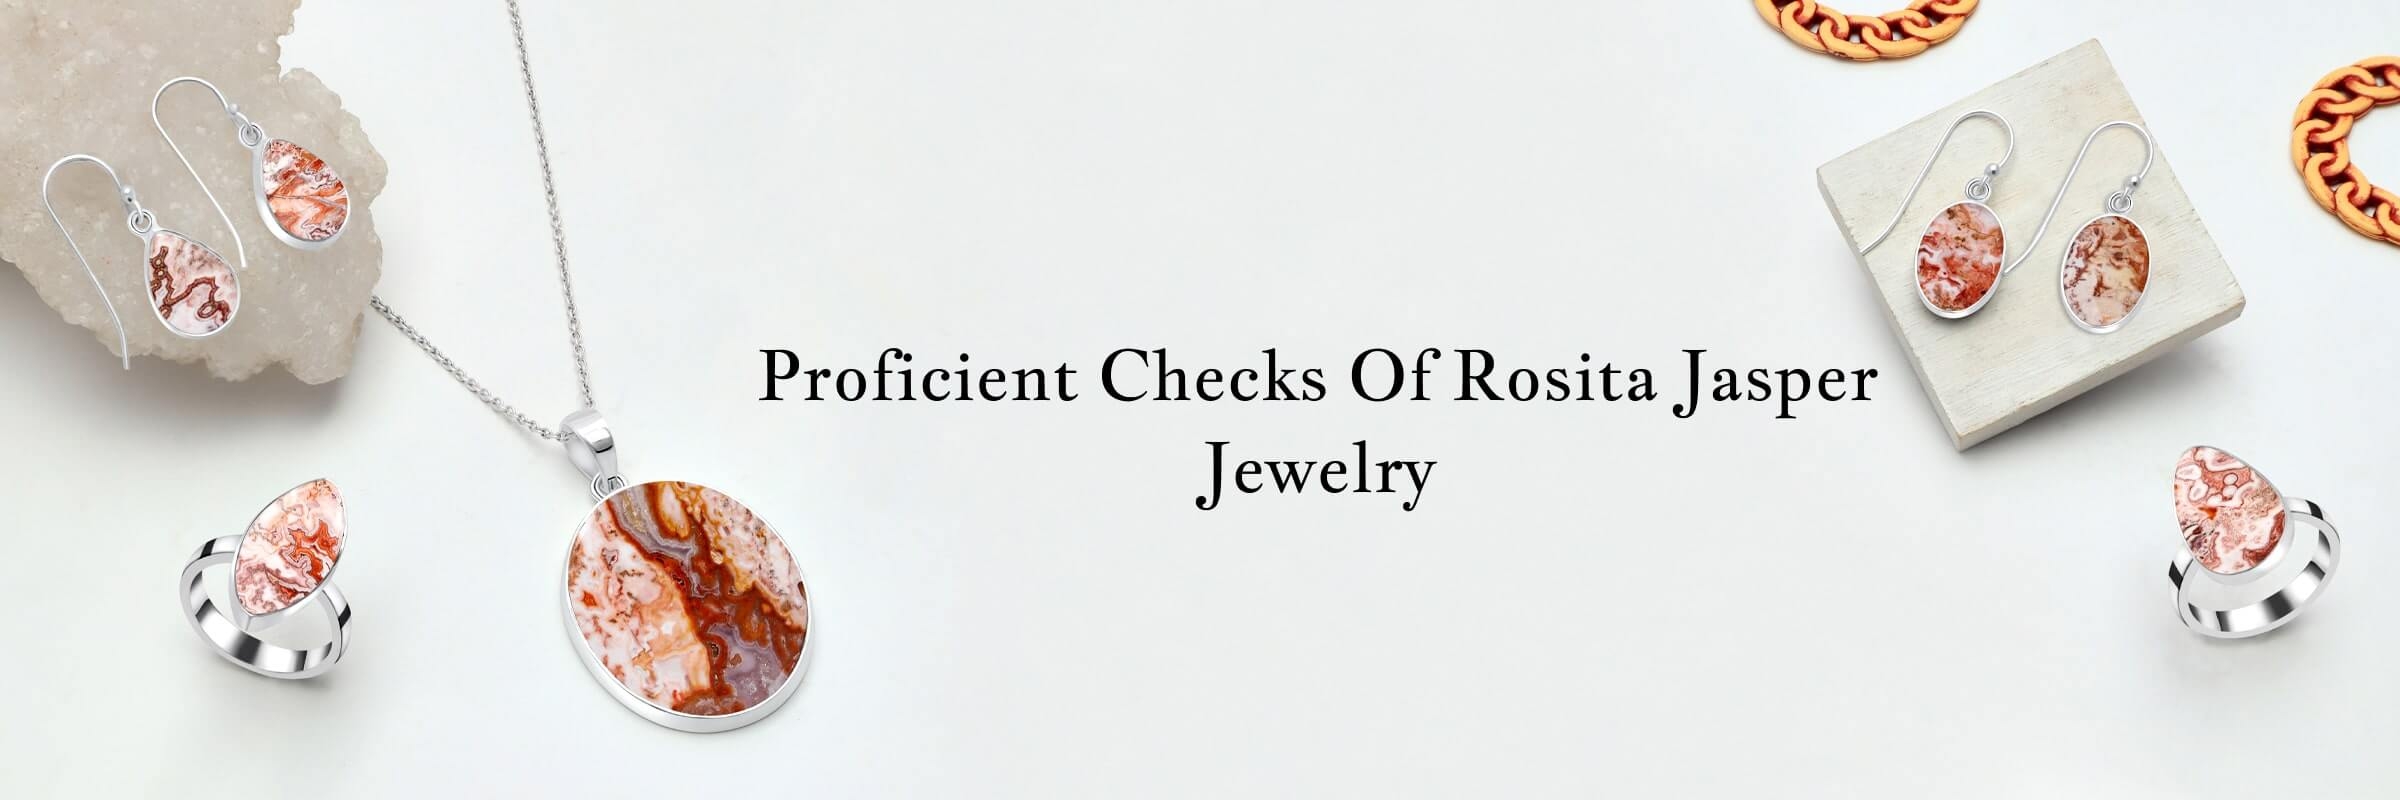 Benefits of Rosita Jasper Jewelry